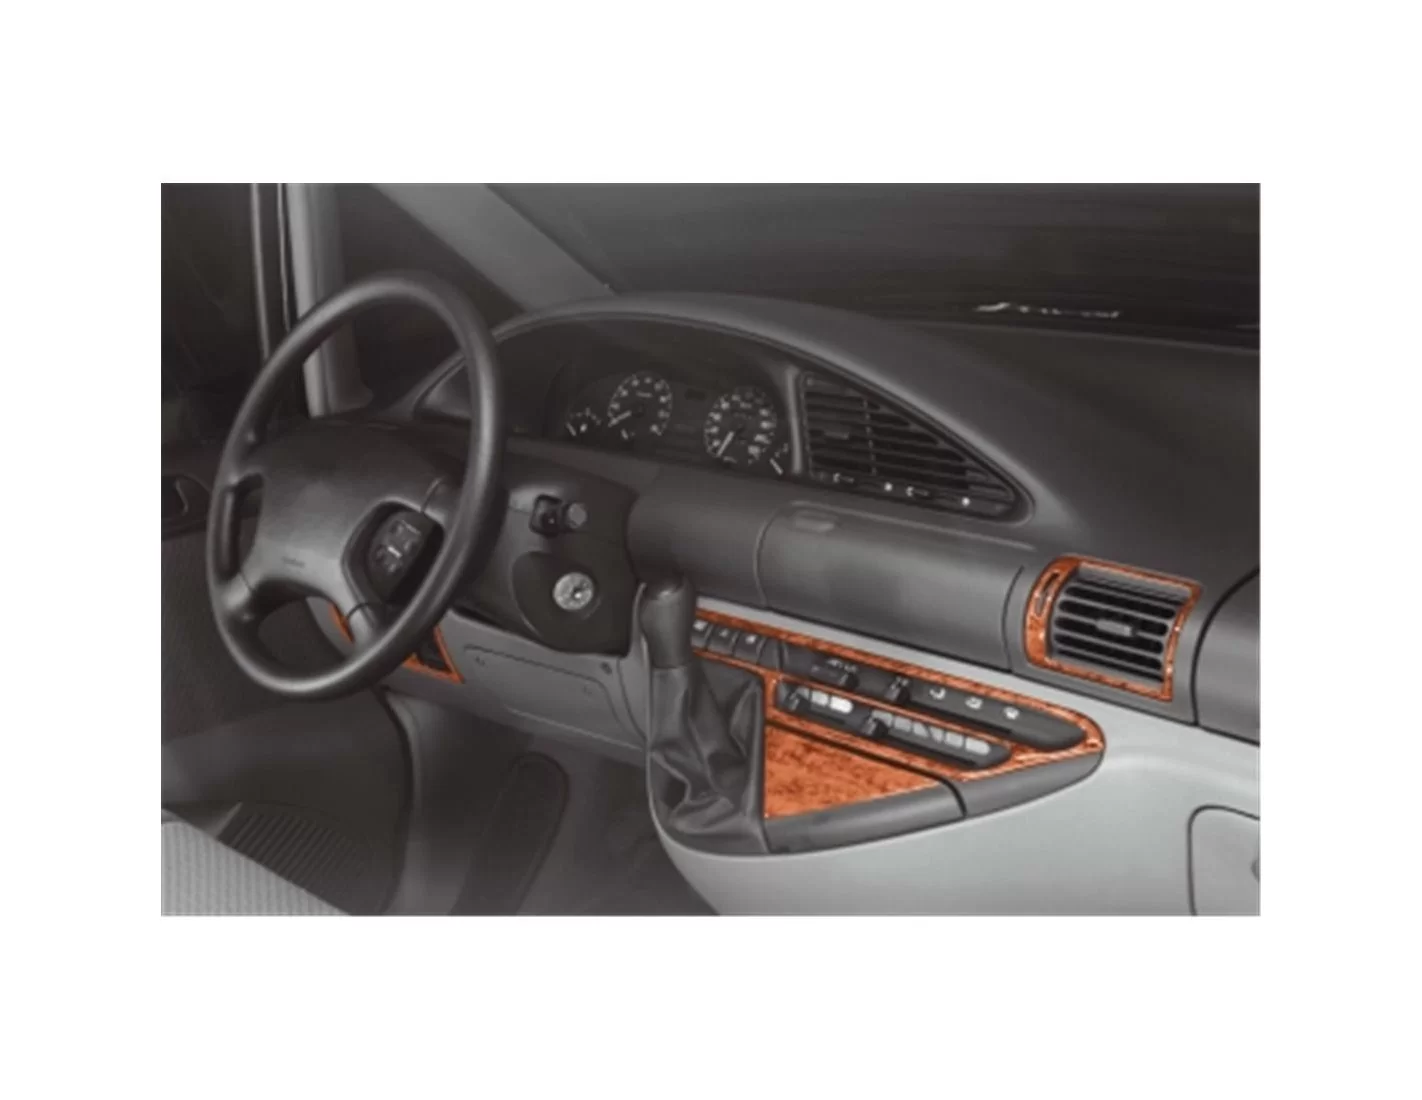 Citroen Evasion 09.94-10.02 3D Decor de carlinga su interior del coche 18-Partes